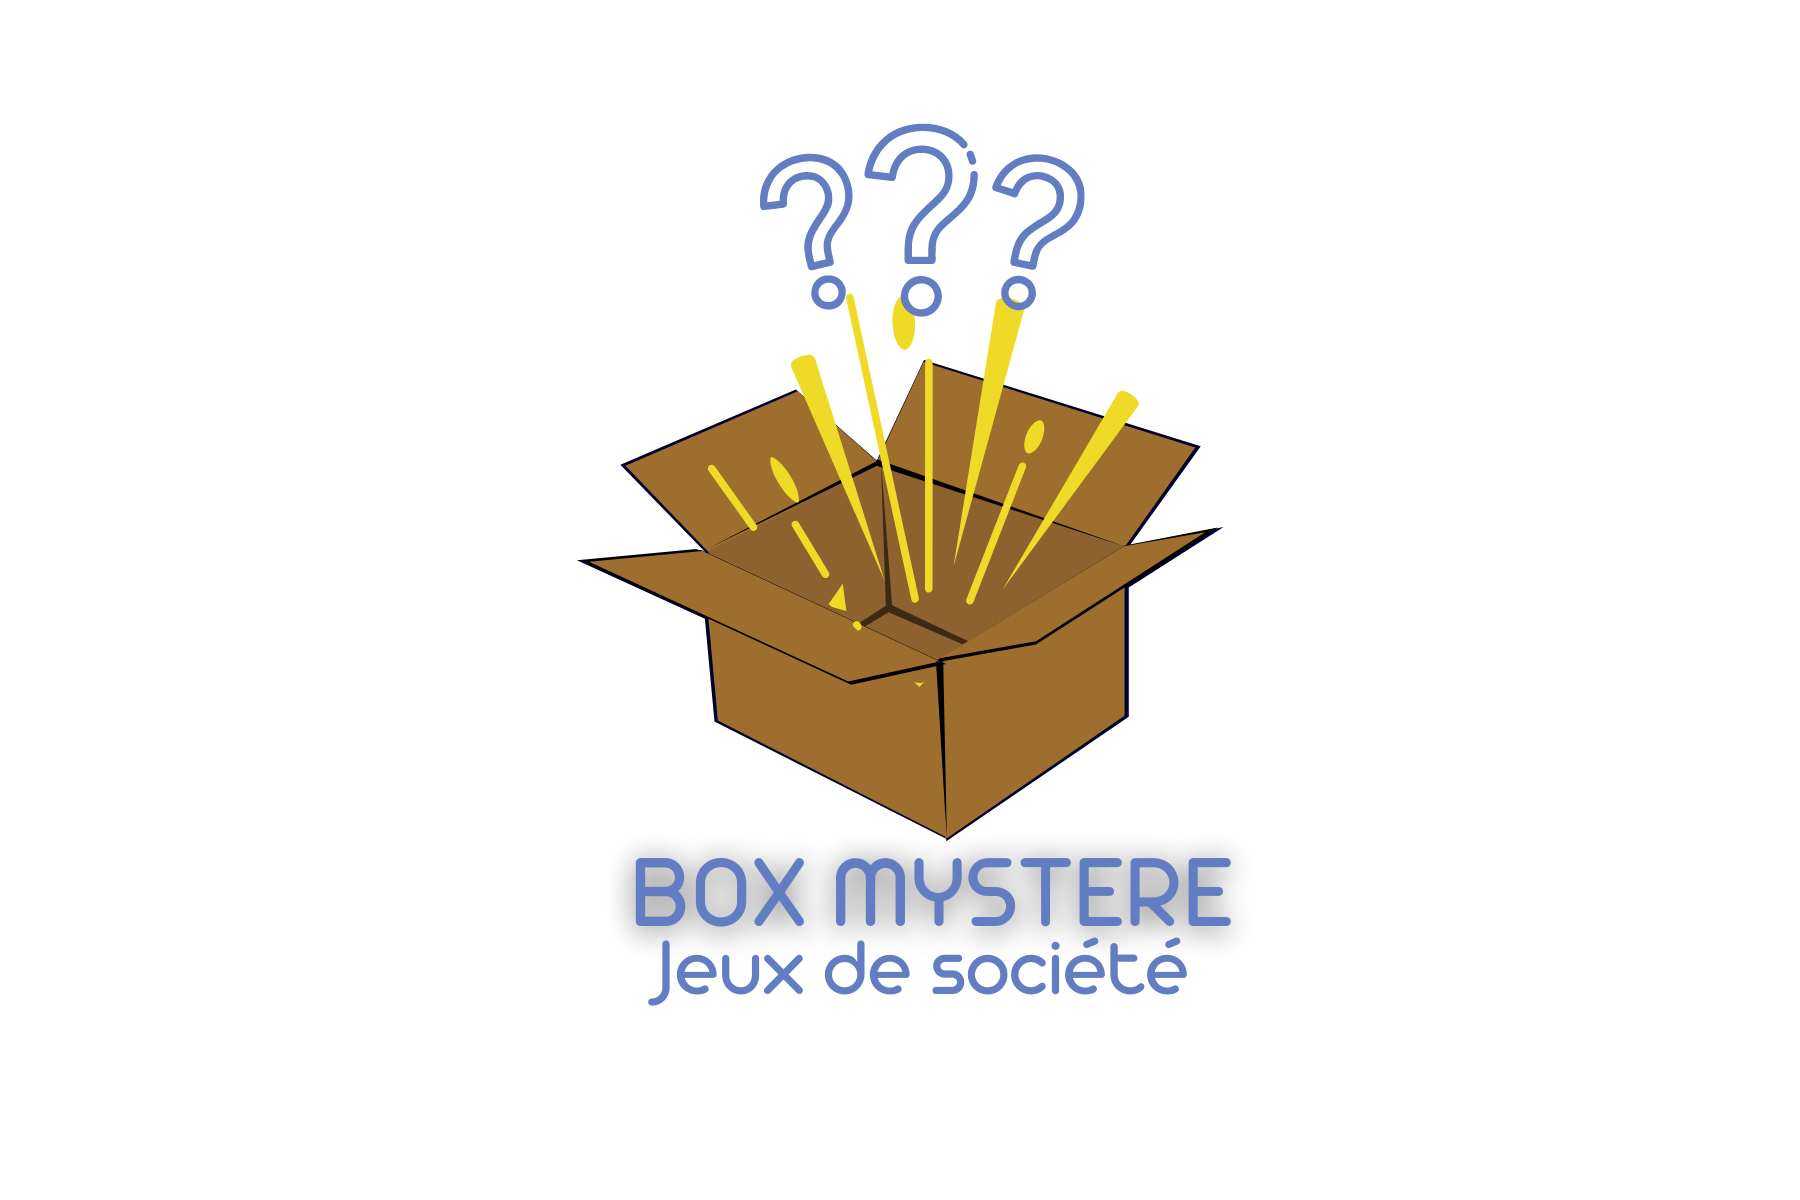 BOX MYSTERE jeux